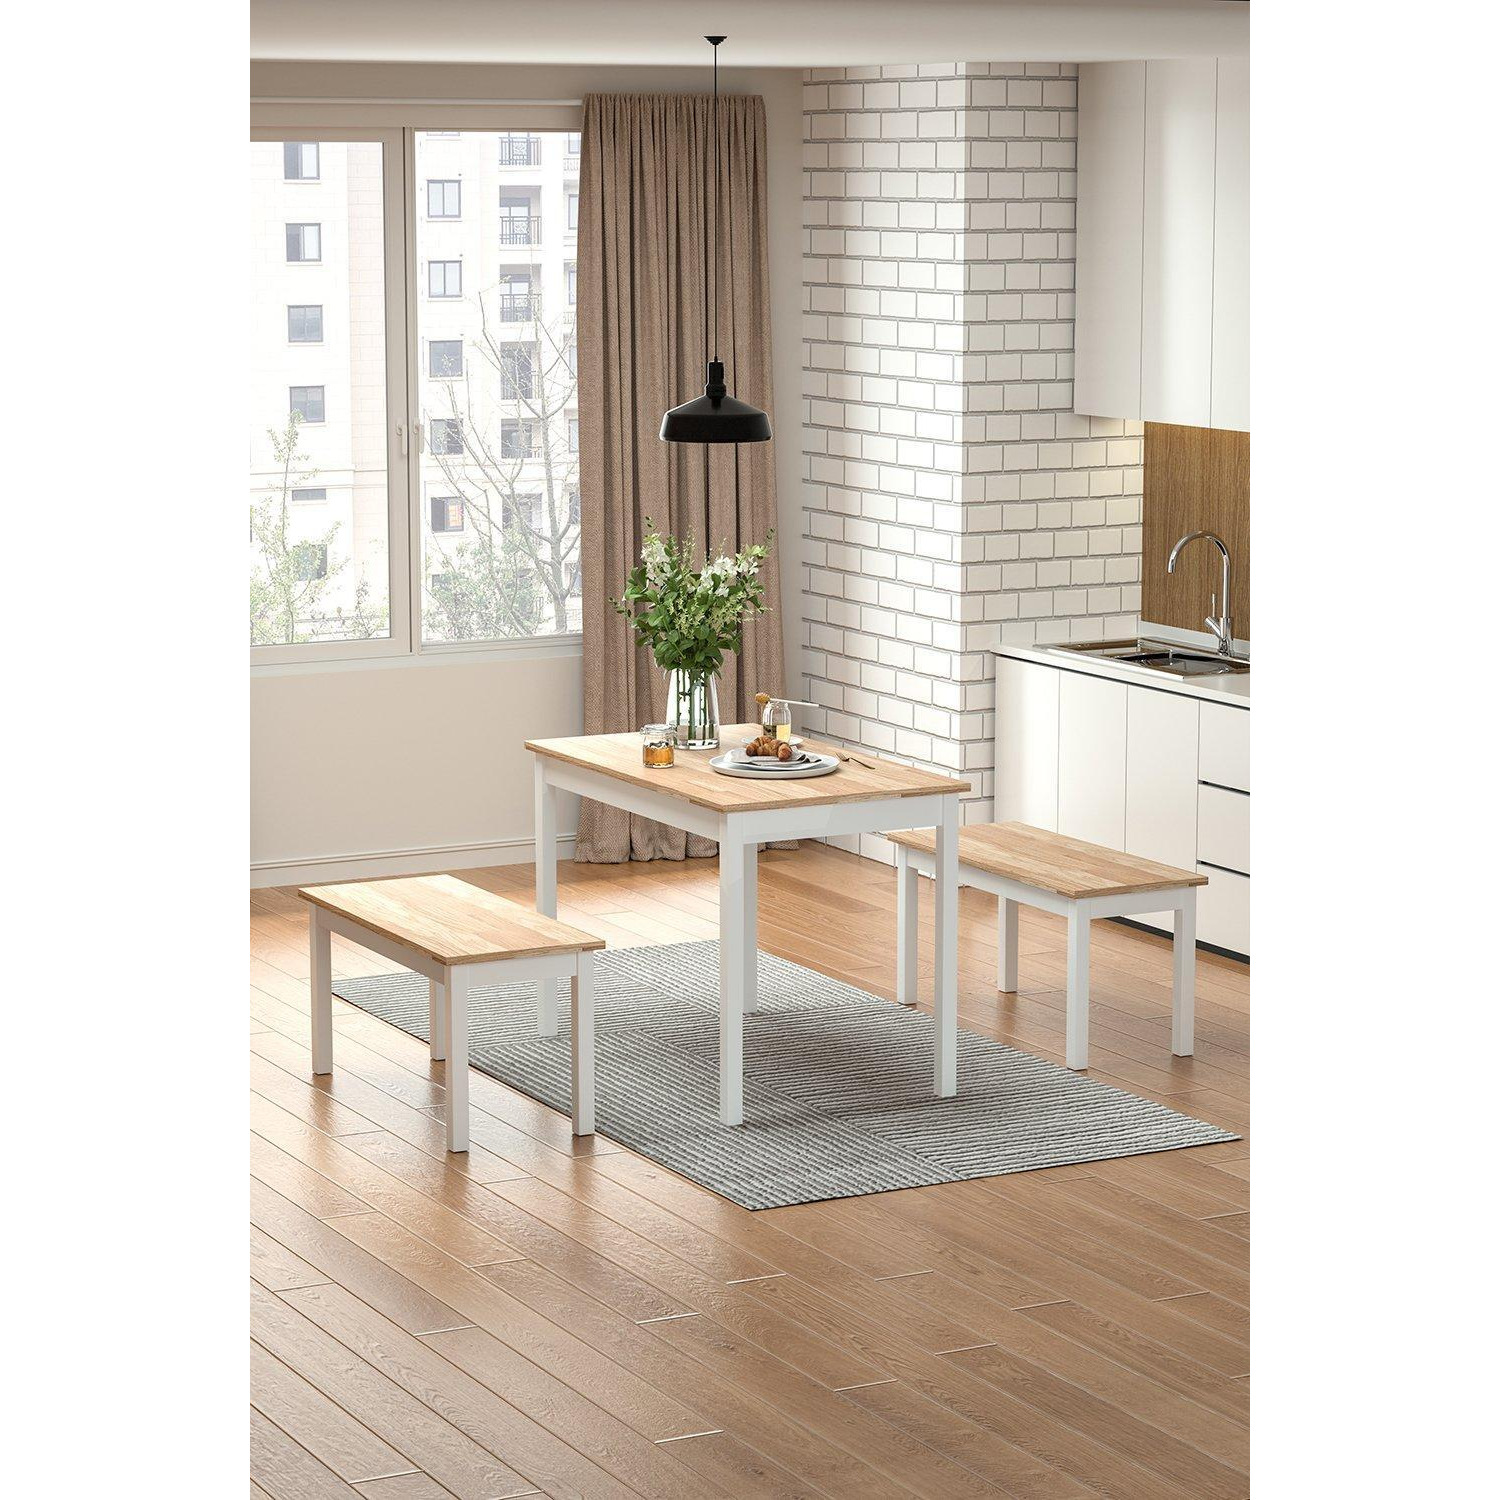 3Pcs Modern Rectangular Pine Dining Table and Bench Set - image 1